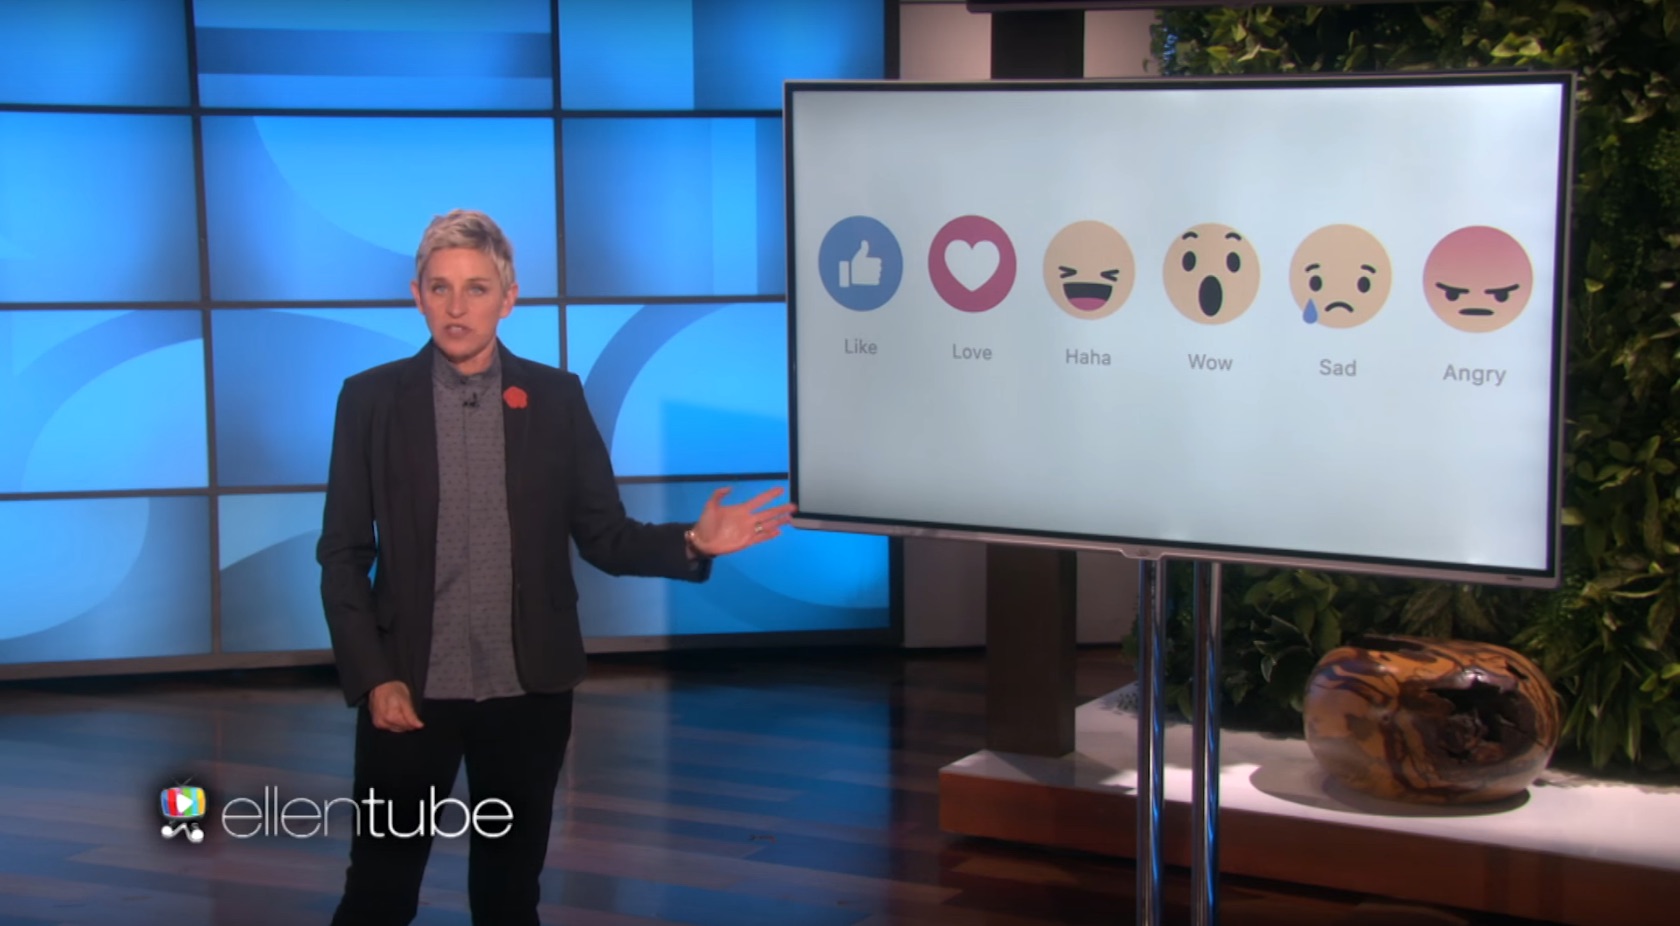 Ellen comedy videos to learn English